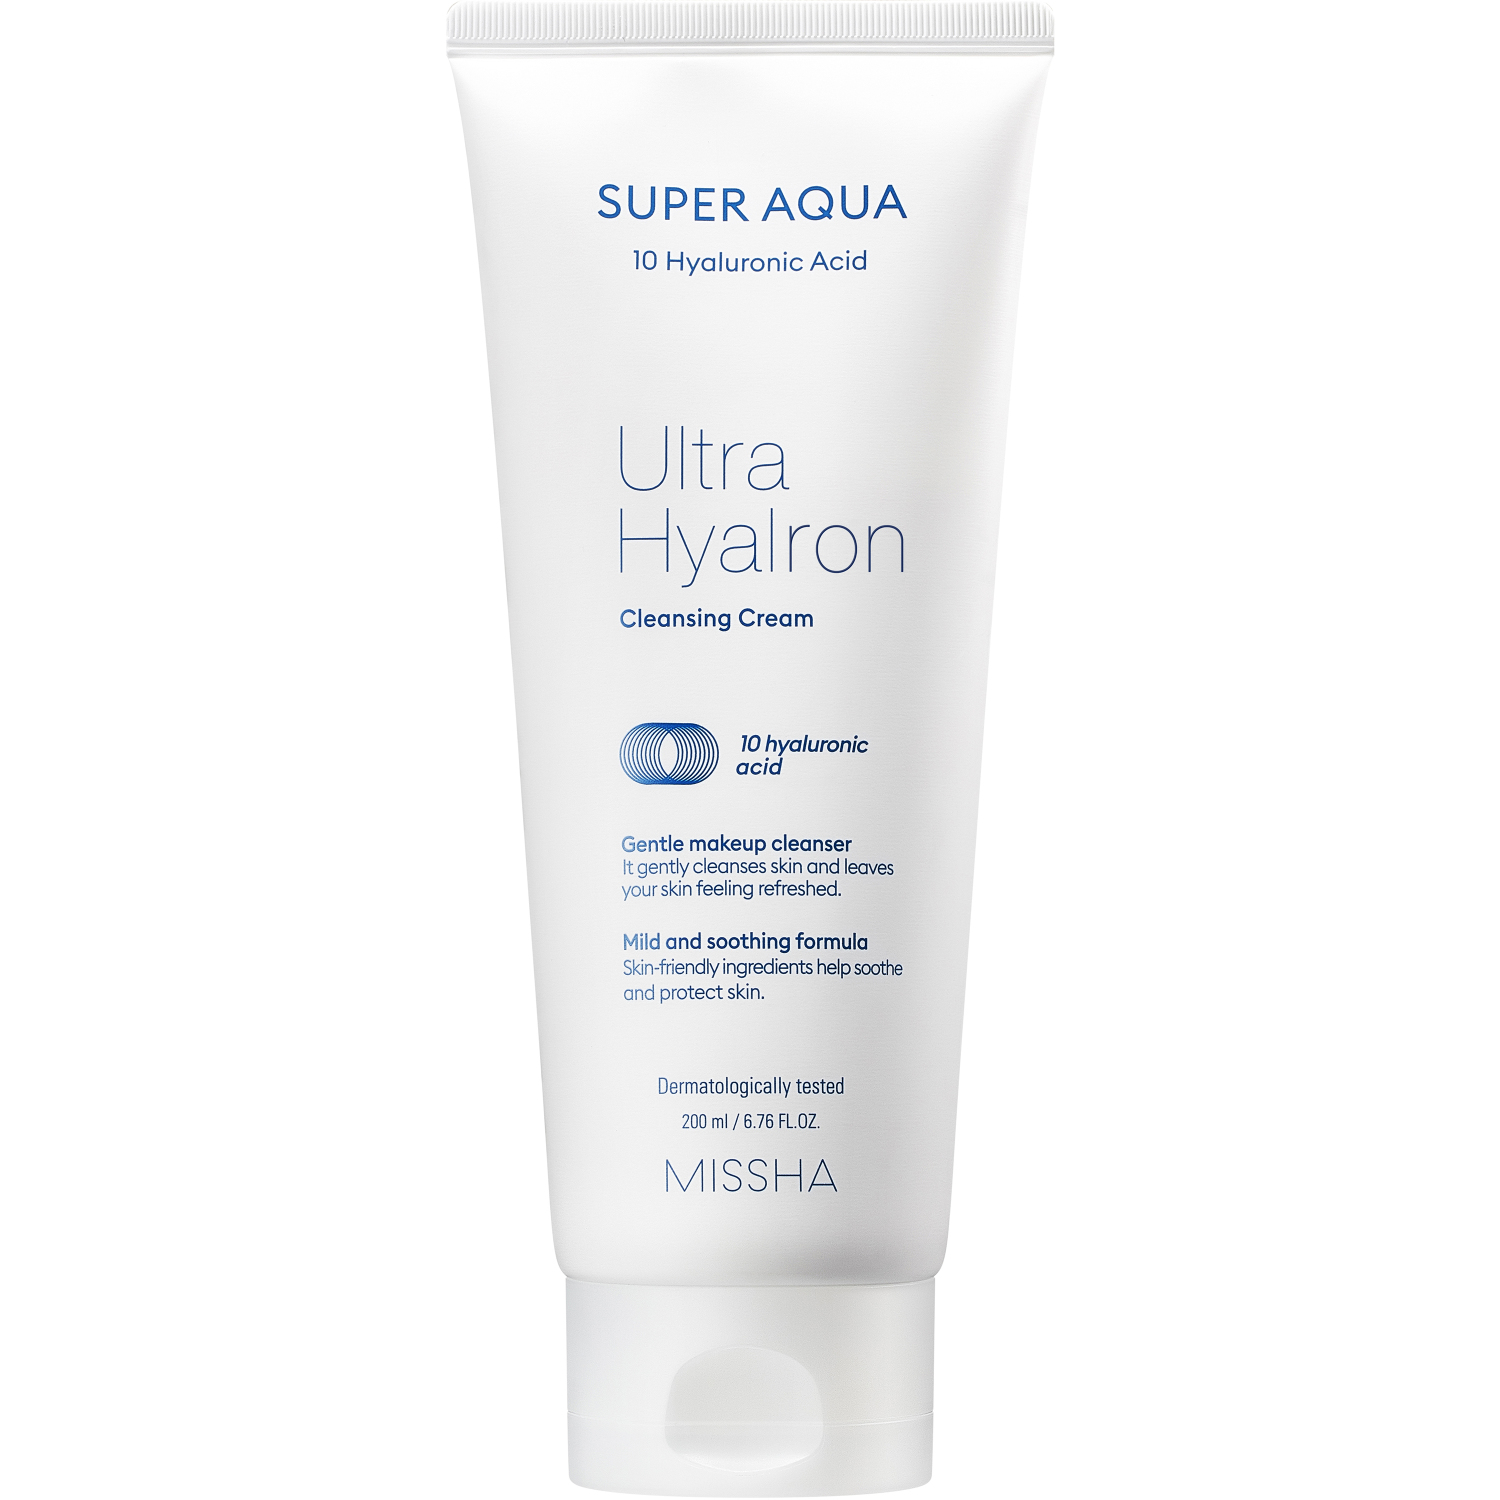 Пенка кремовая Missha Super Aqua Ultra Hyalron для умывания и снятия макияжа, 200 мл мусс для умывания missha пенка super aqua ultra hyalron для умывания и снятия макияжа